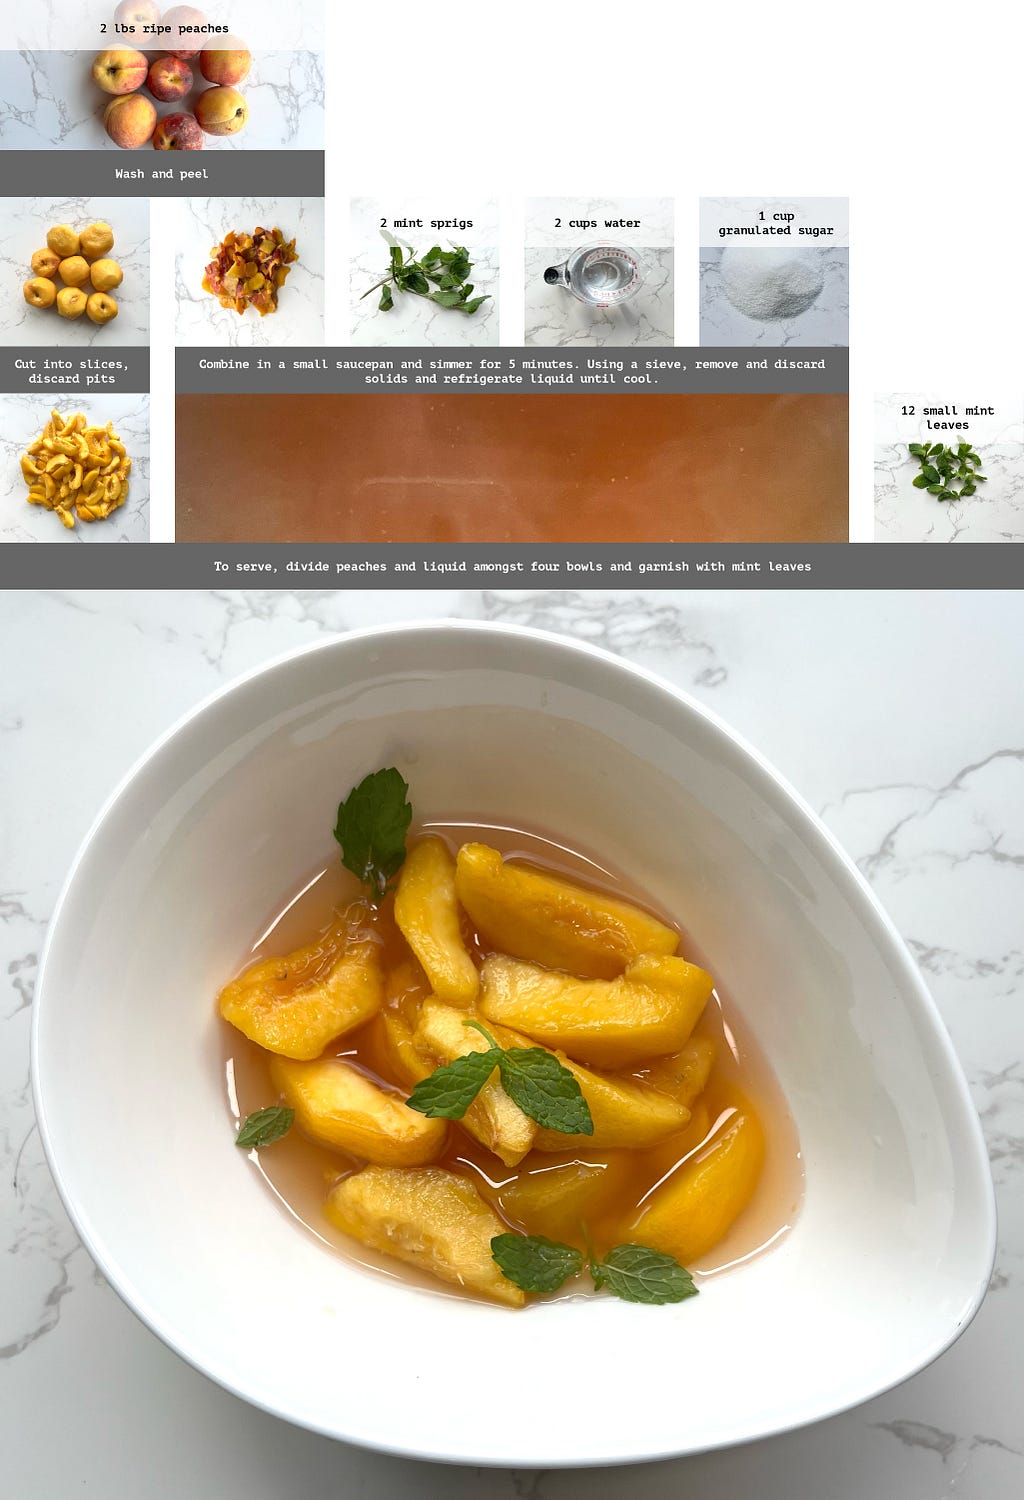 A RecipeBlock for Peach Confit with Mint